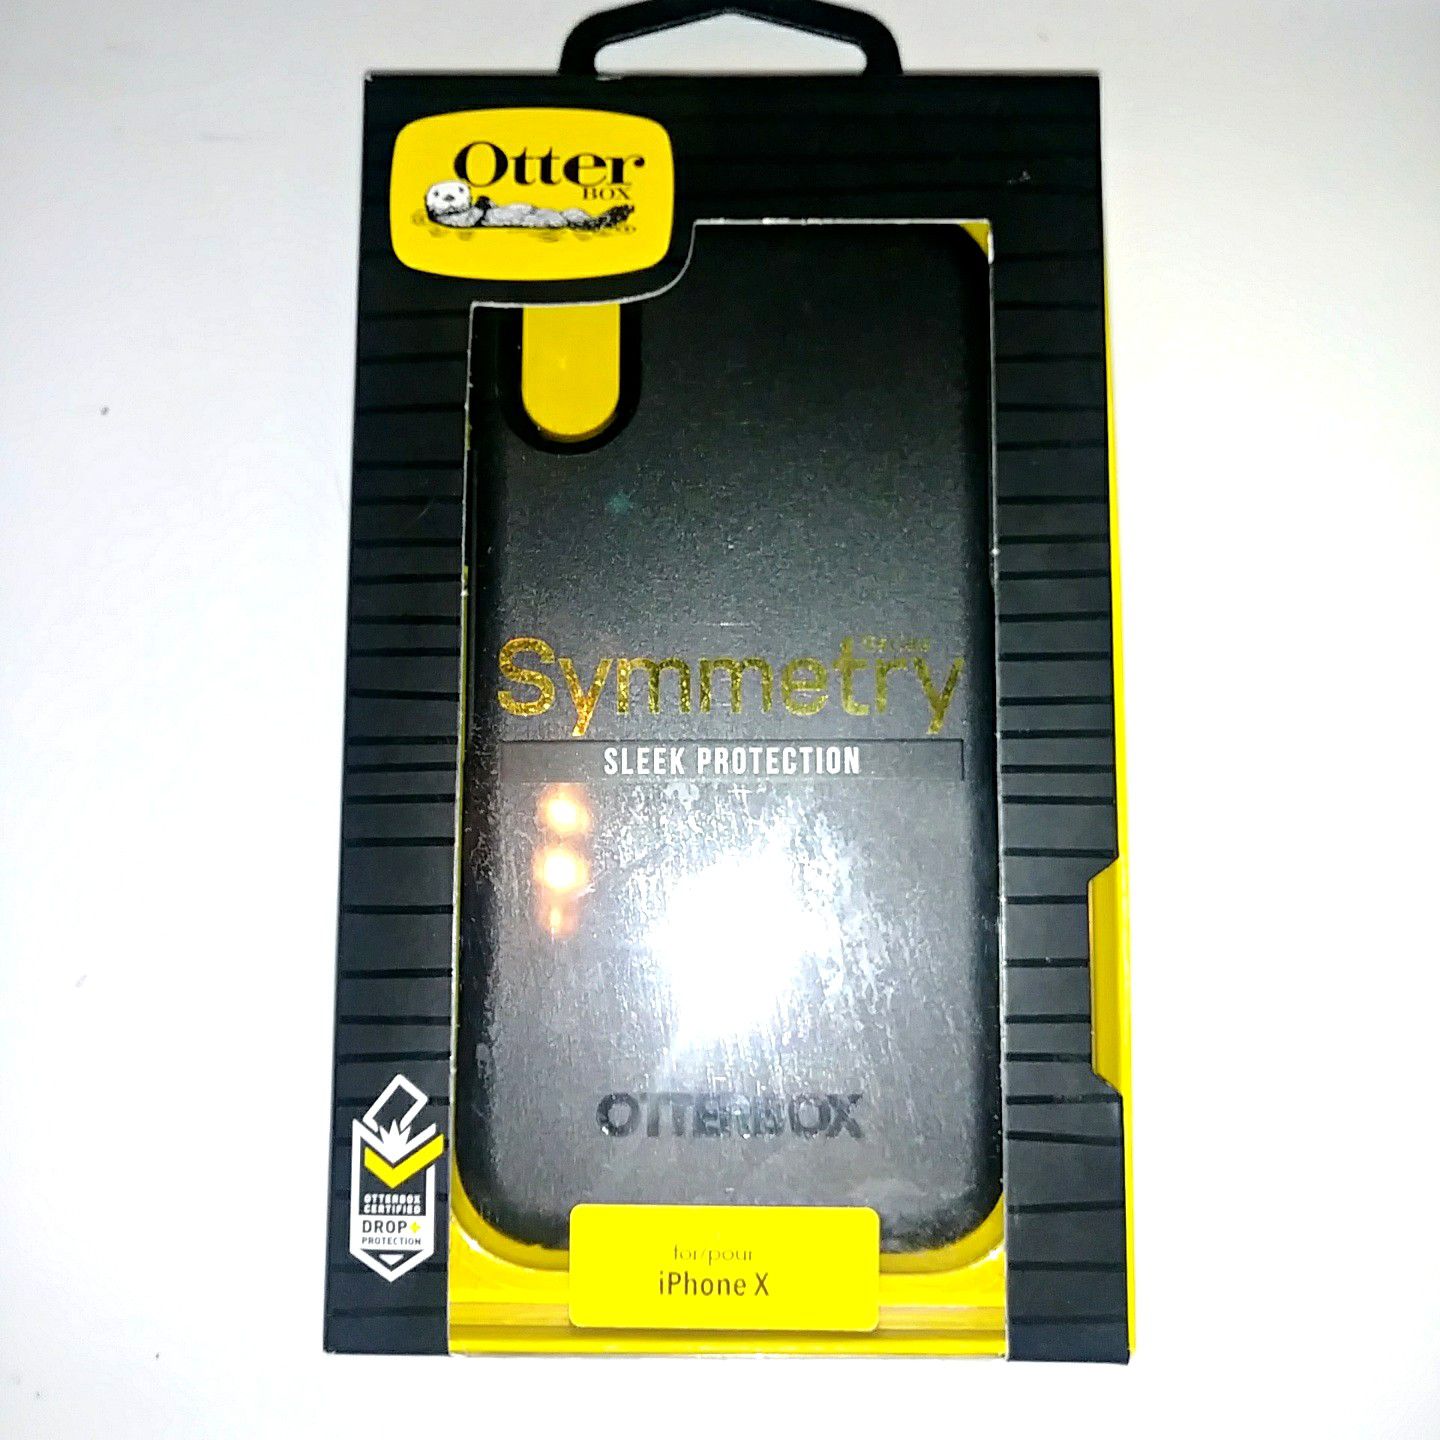 Otterbox Symmetry iPhone X Case (BRAND NEW)